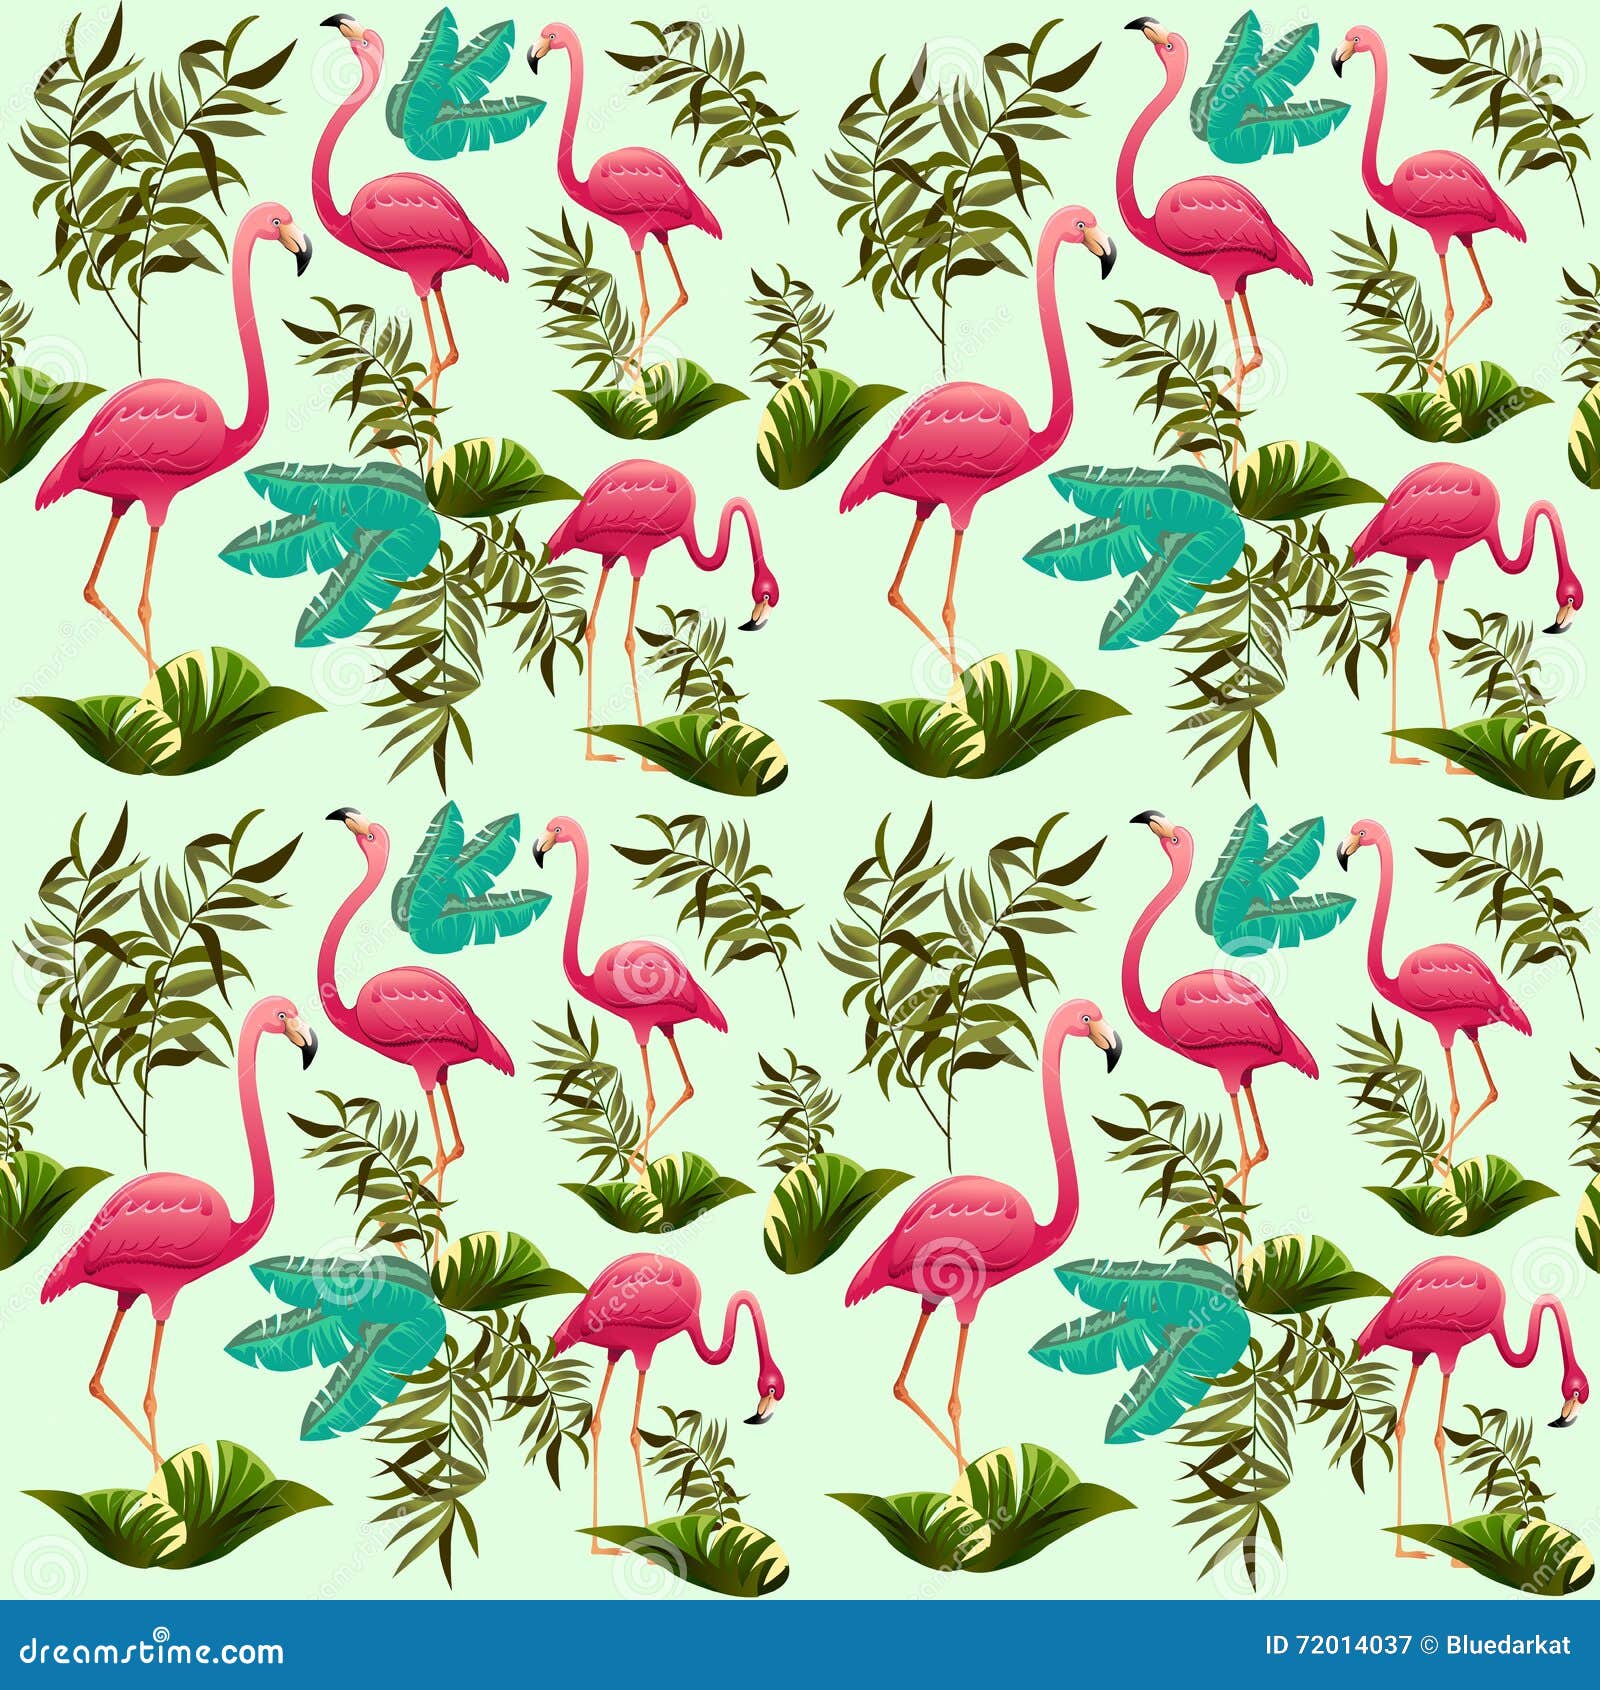 Pink Flamingos Vector Illustration. Decorative Design Elements. Exotic ...